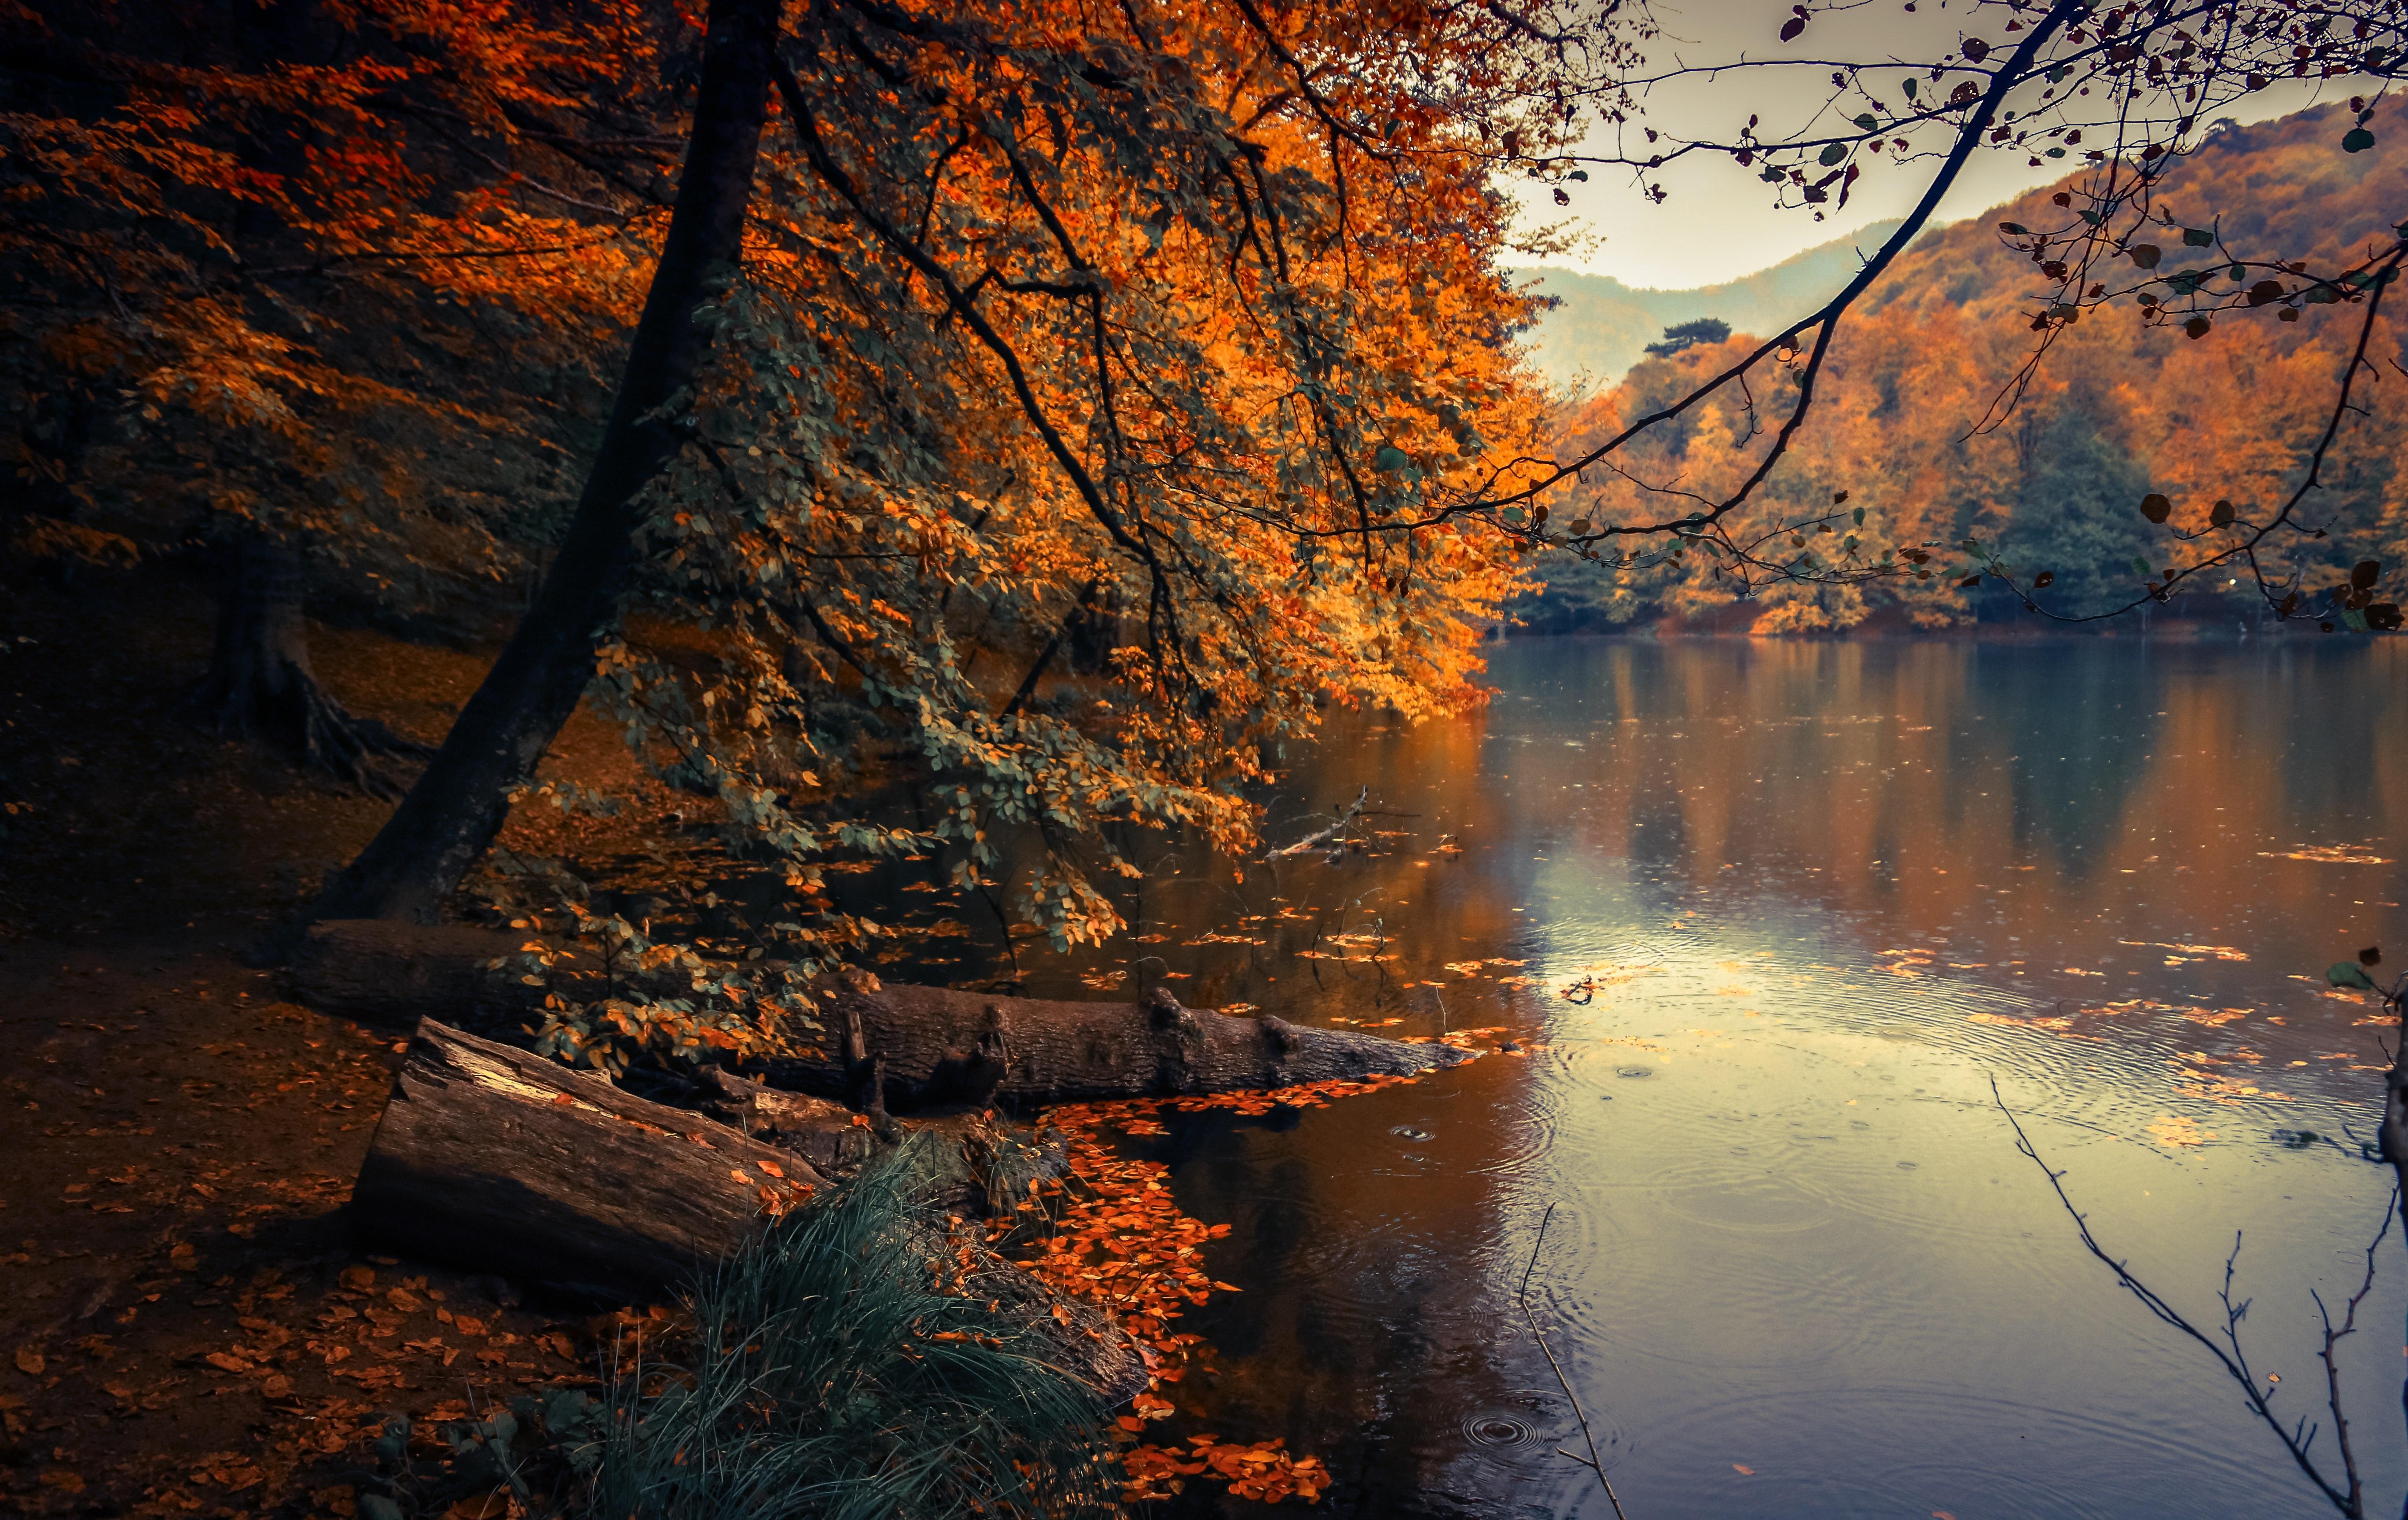 Autumn River Bank (Photo credit to Emre) [5472 x 3454]